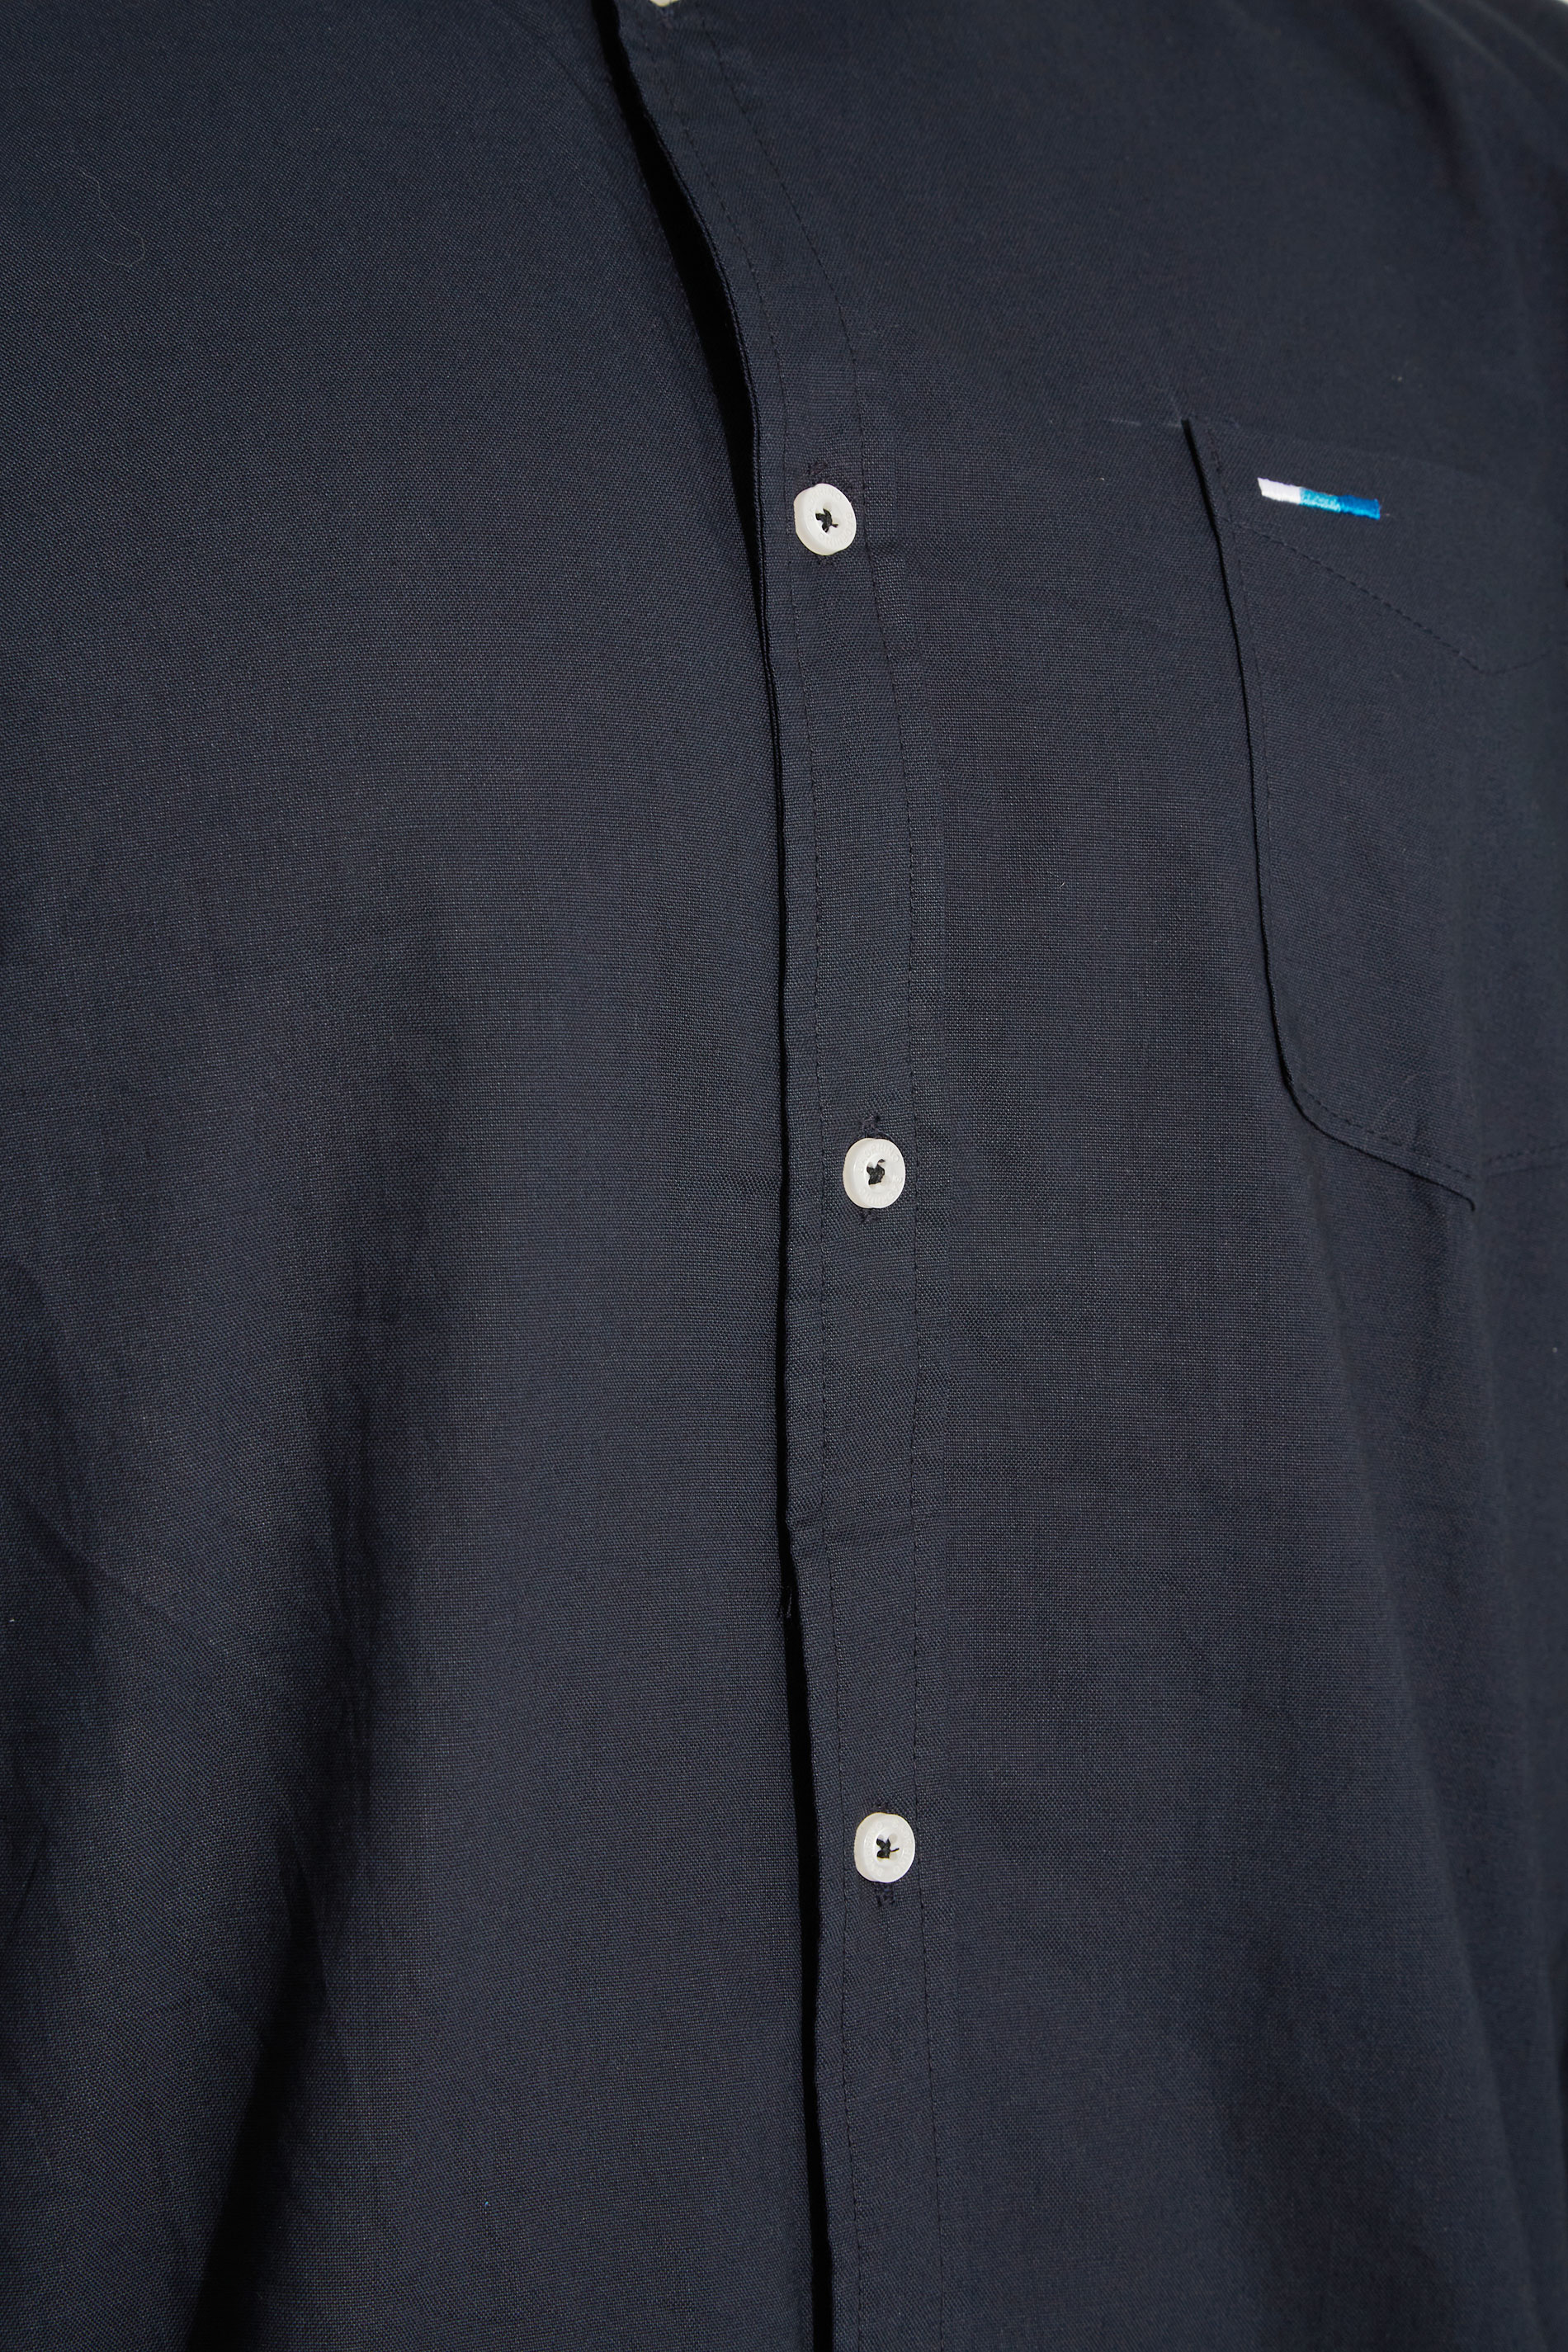 BadRhino Navy Blue Essential Long Sleeve Oxford Shirt | BadRhino